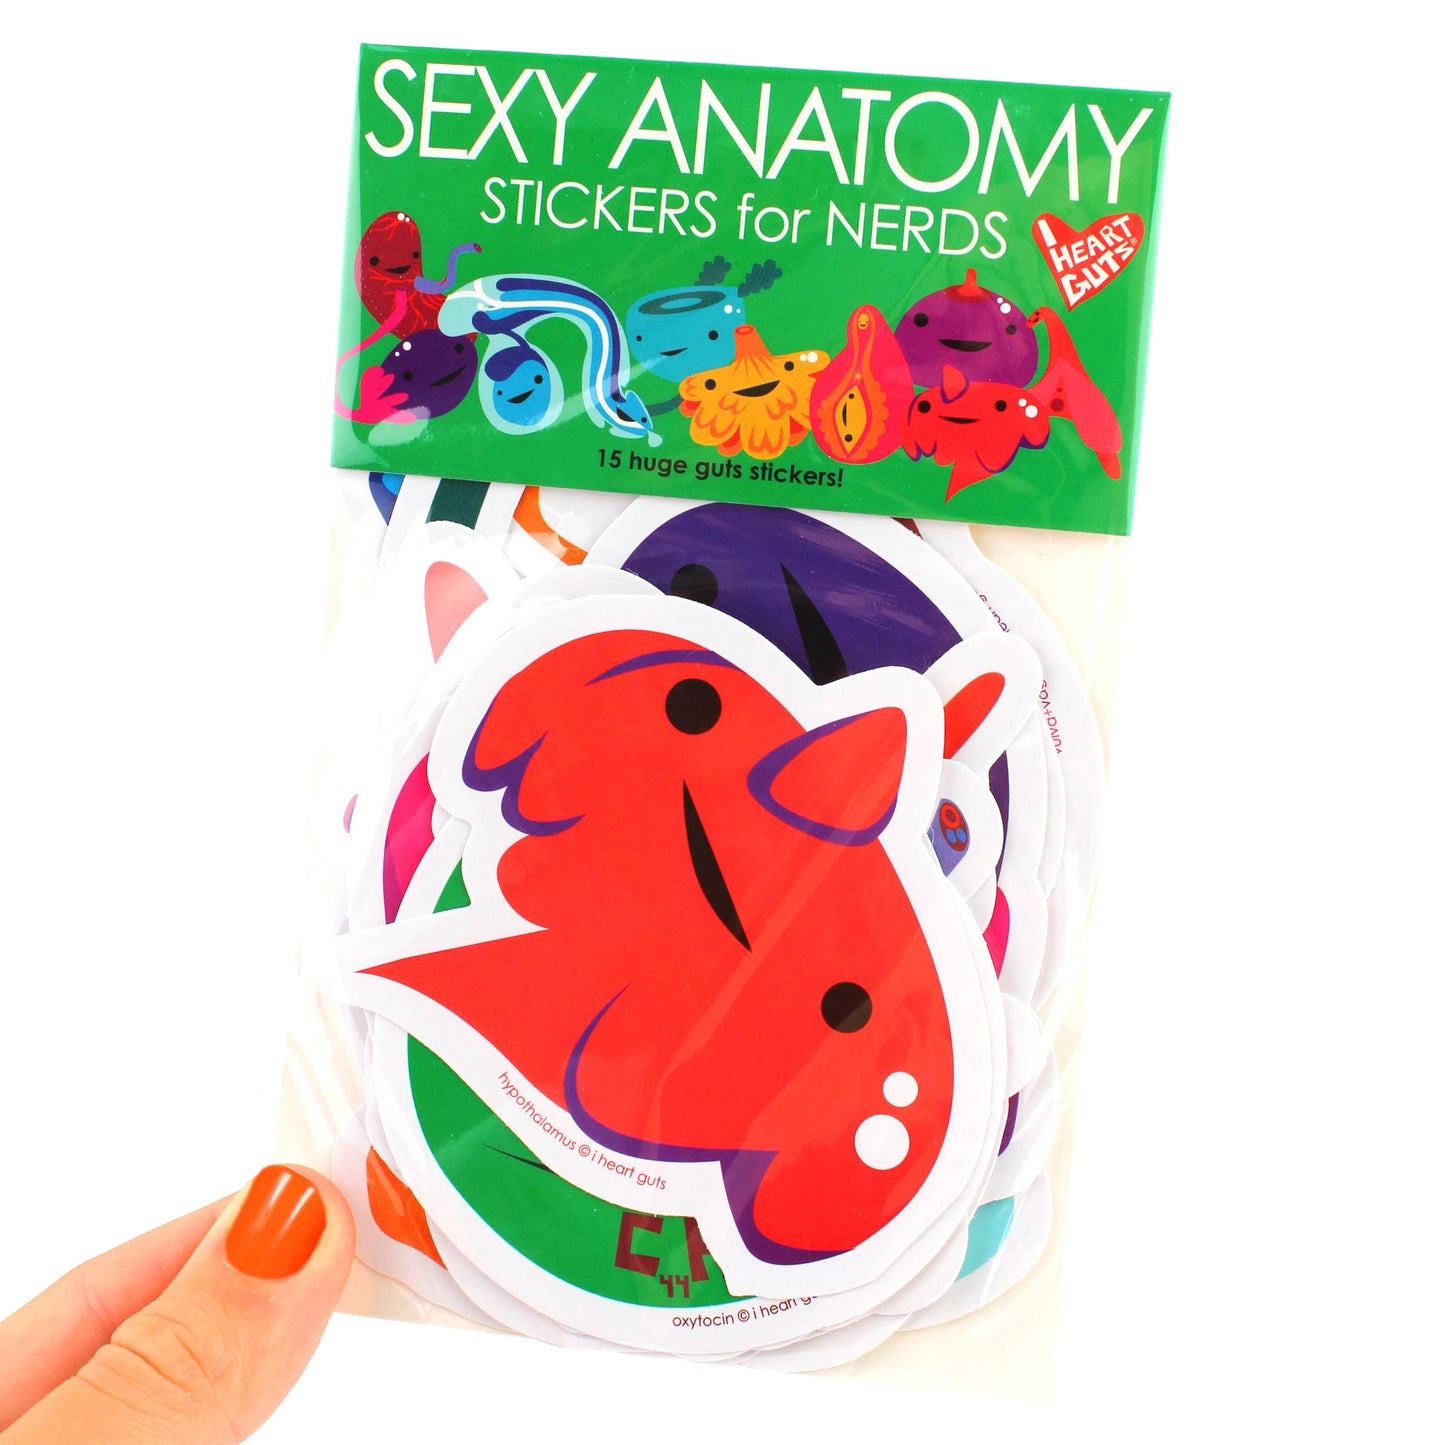 Sticker Pack - Sexy Anatomy Stickers for Nerds